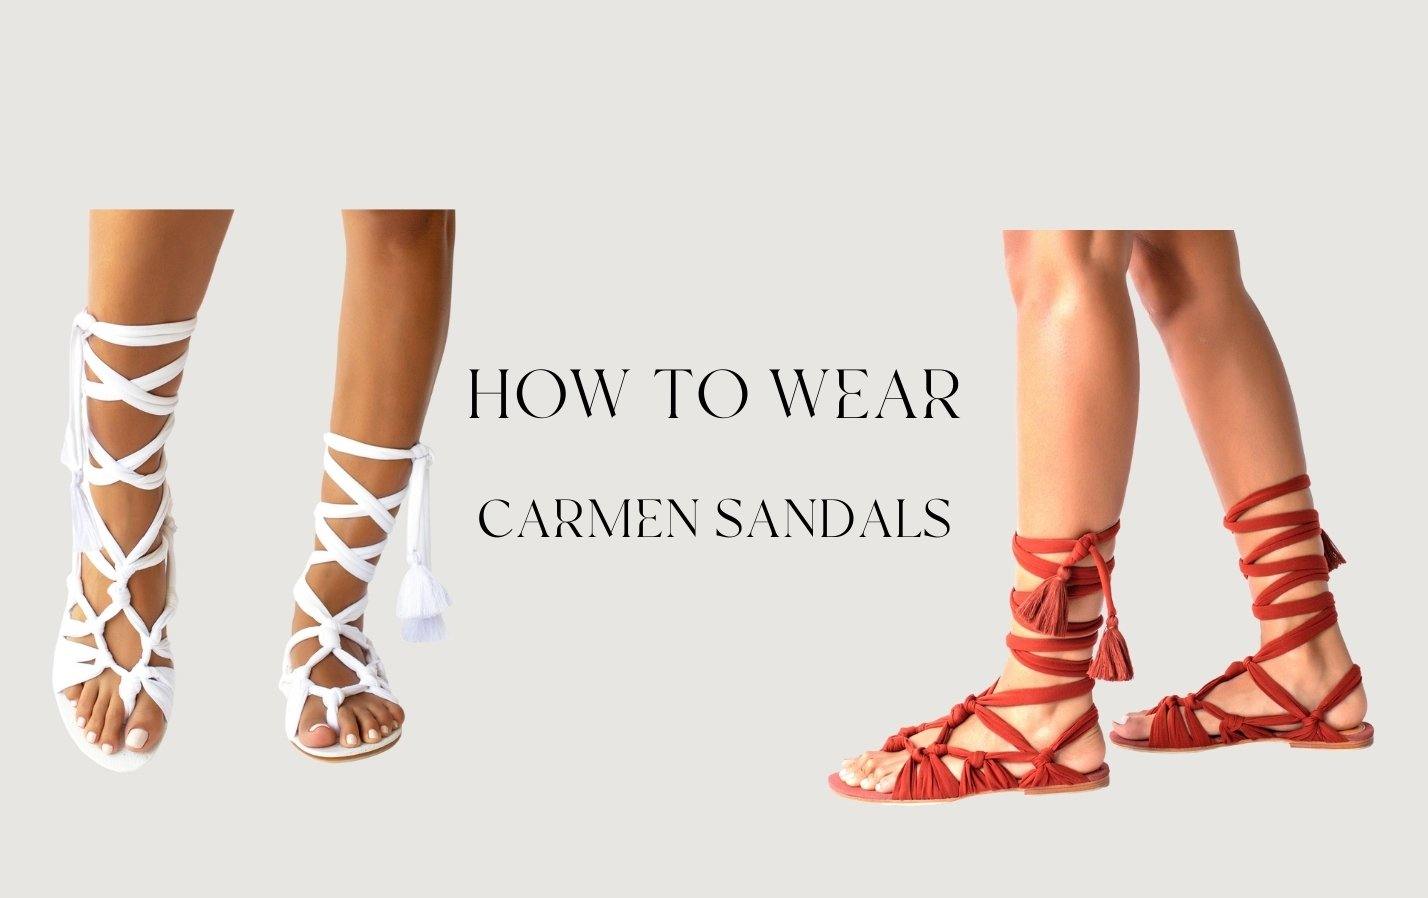 HOW TO WEAR CARMEN SANDALS - Erika Peña